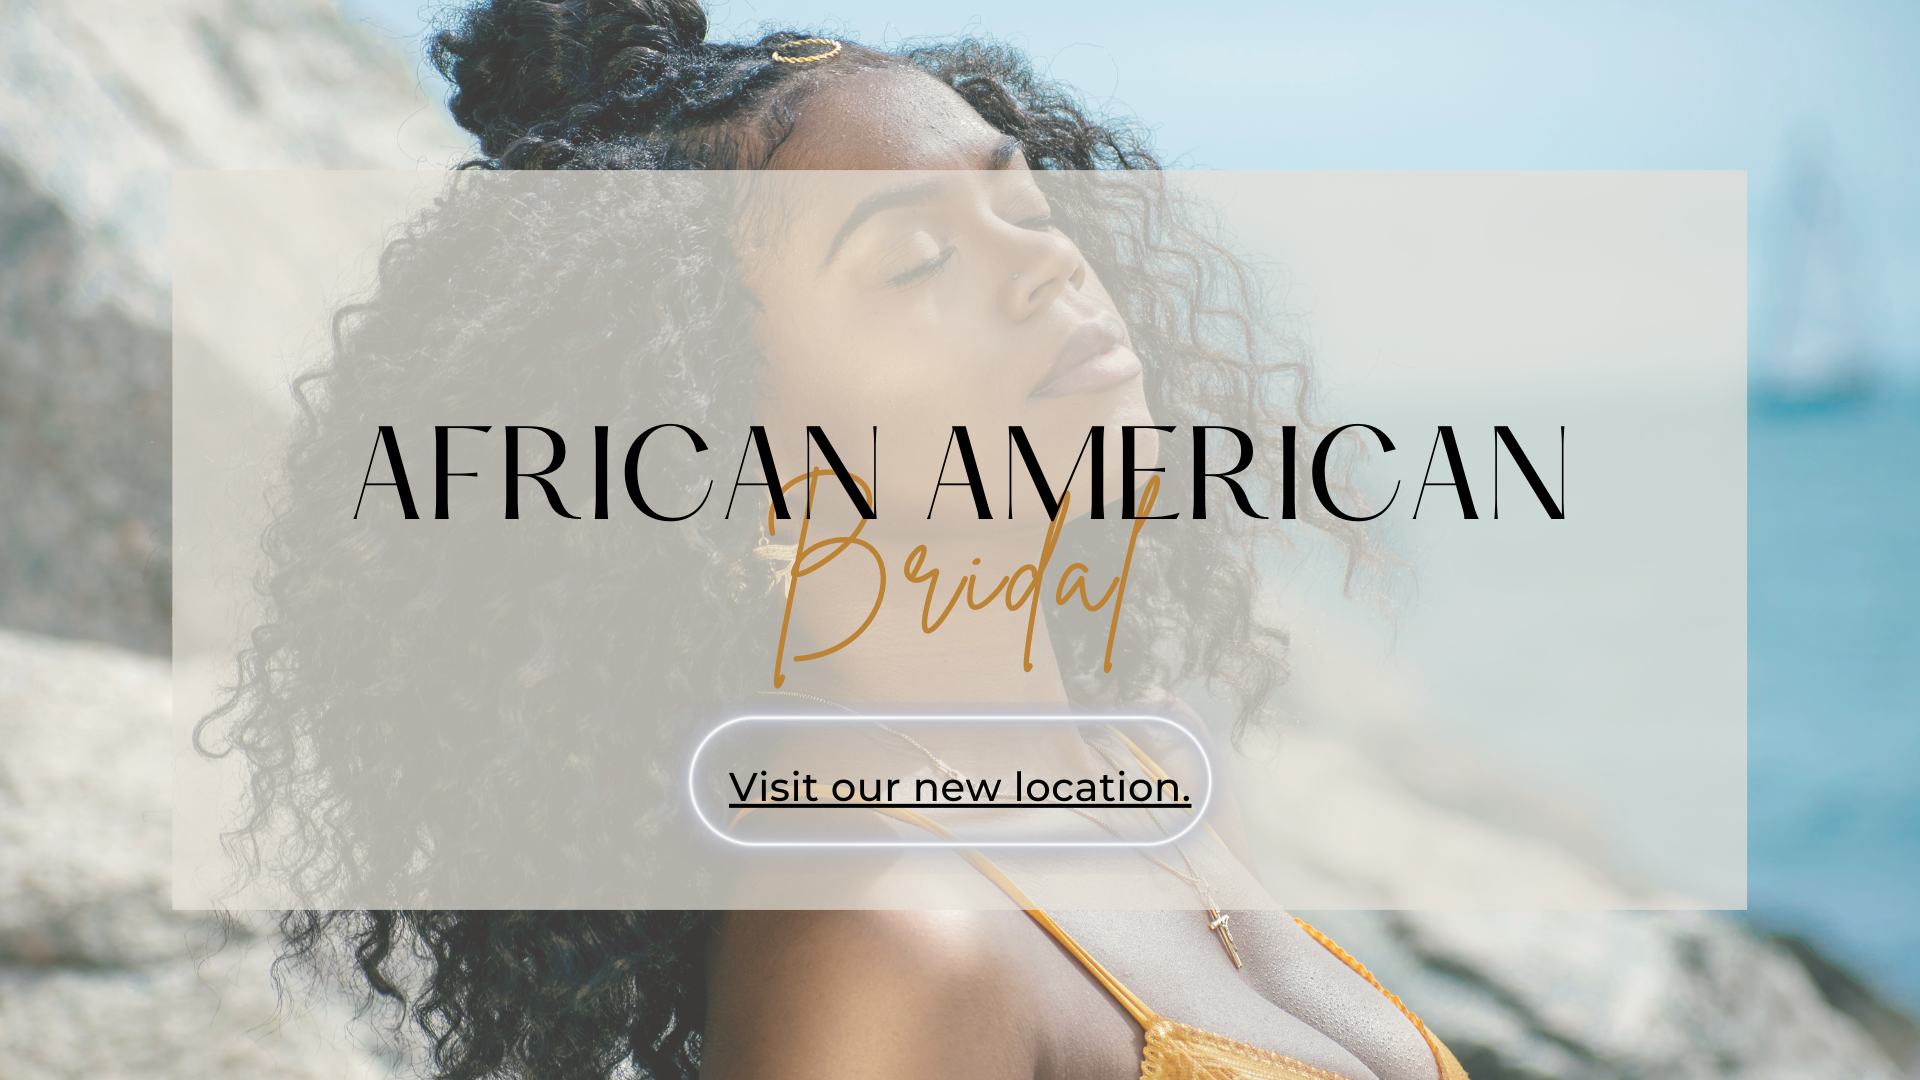 African American Bridal redirect 